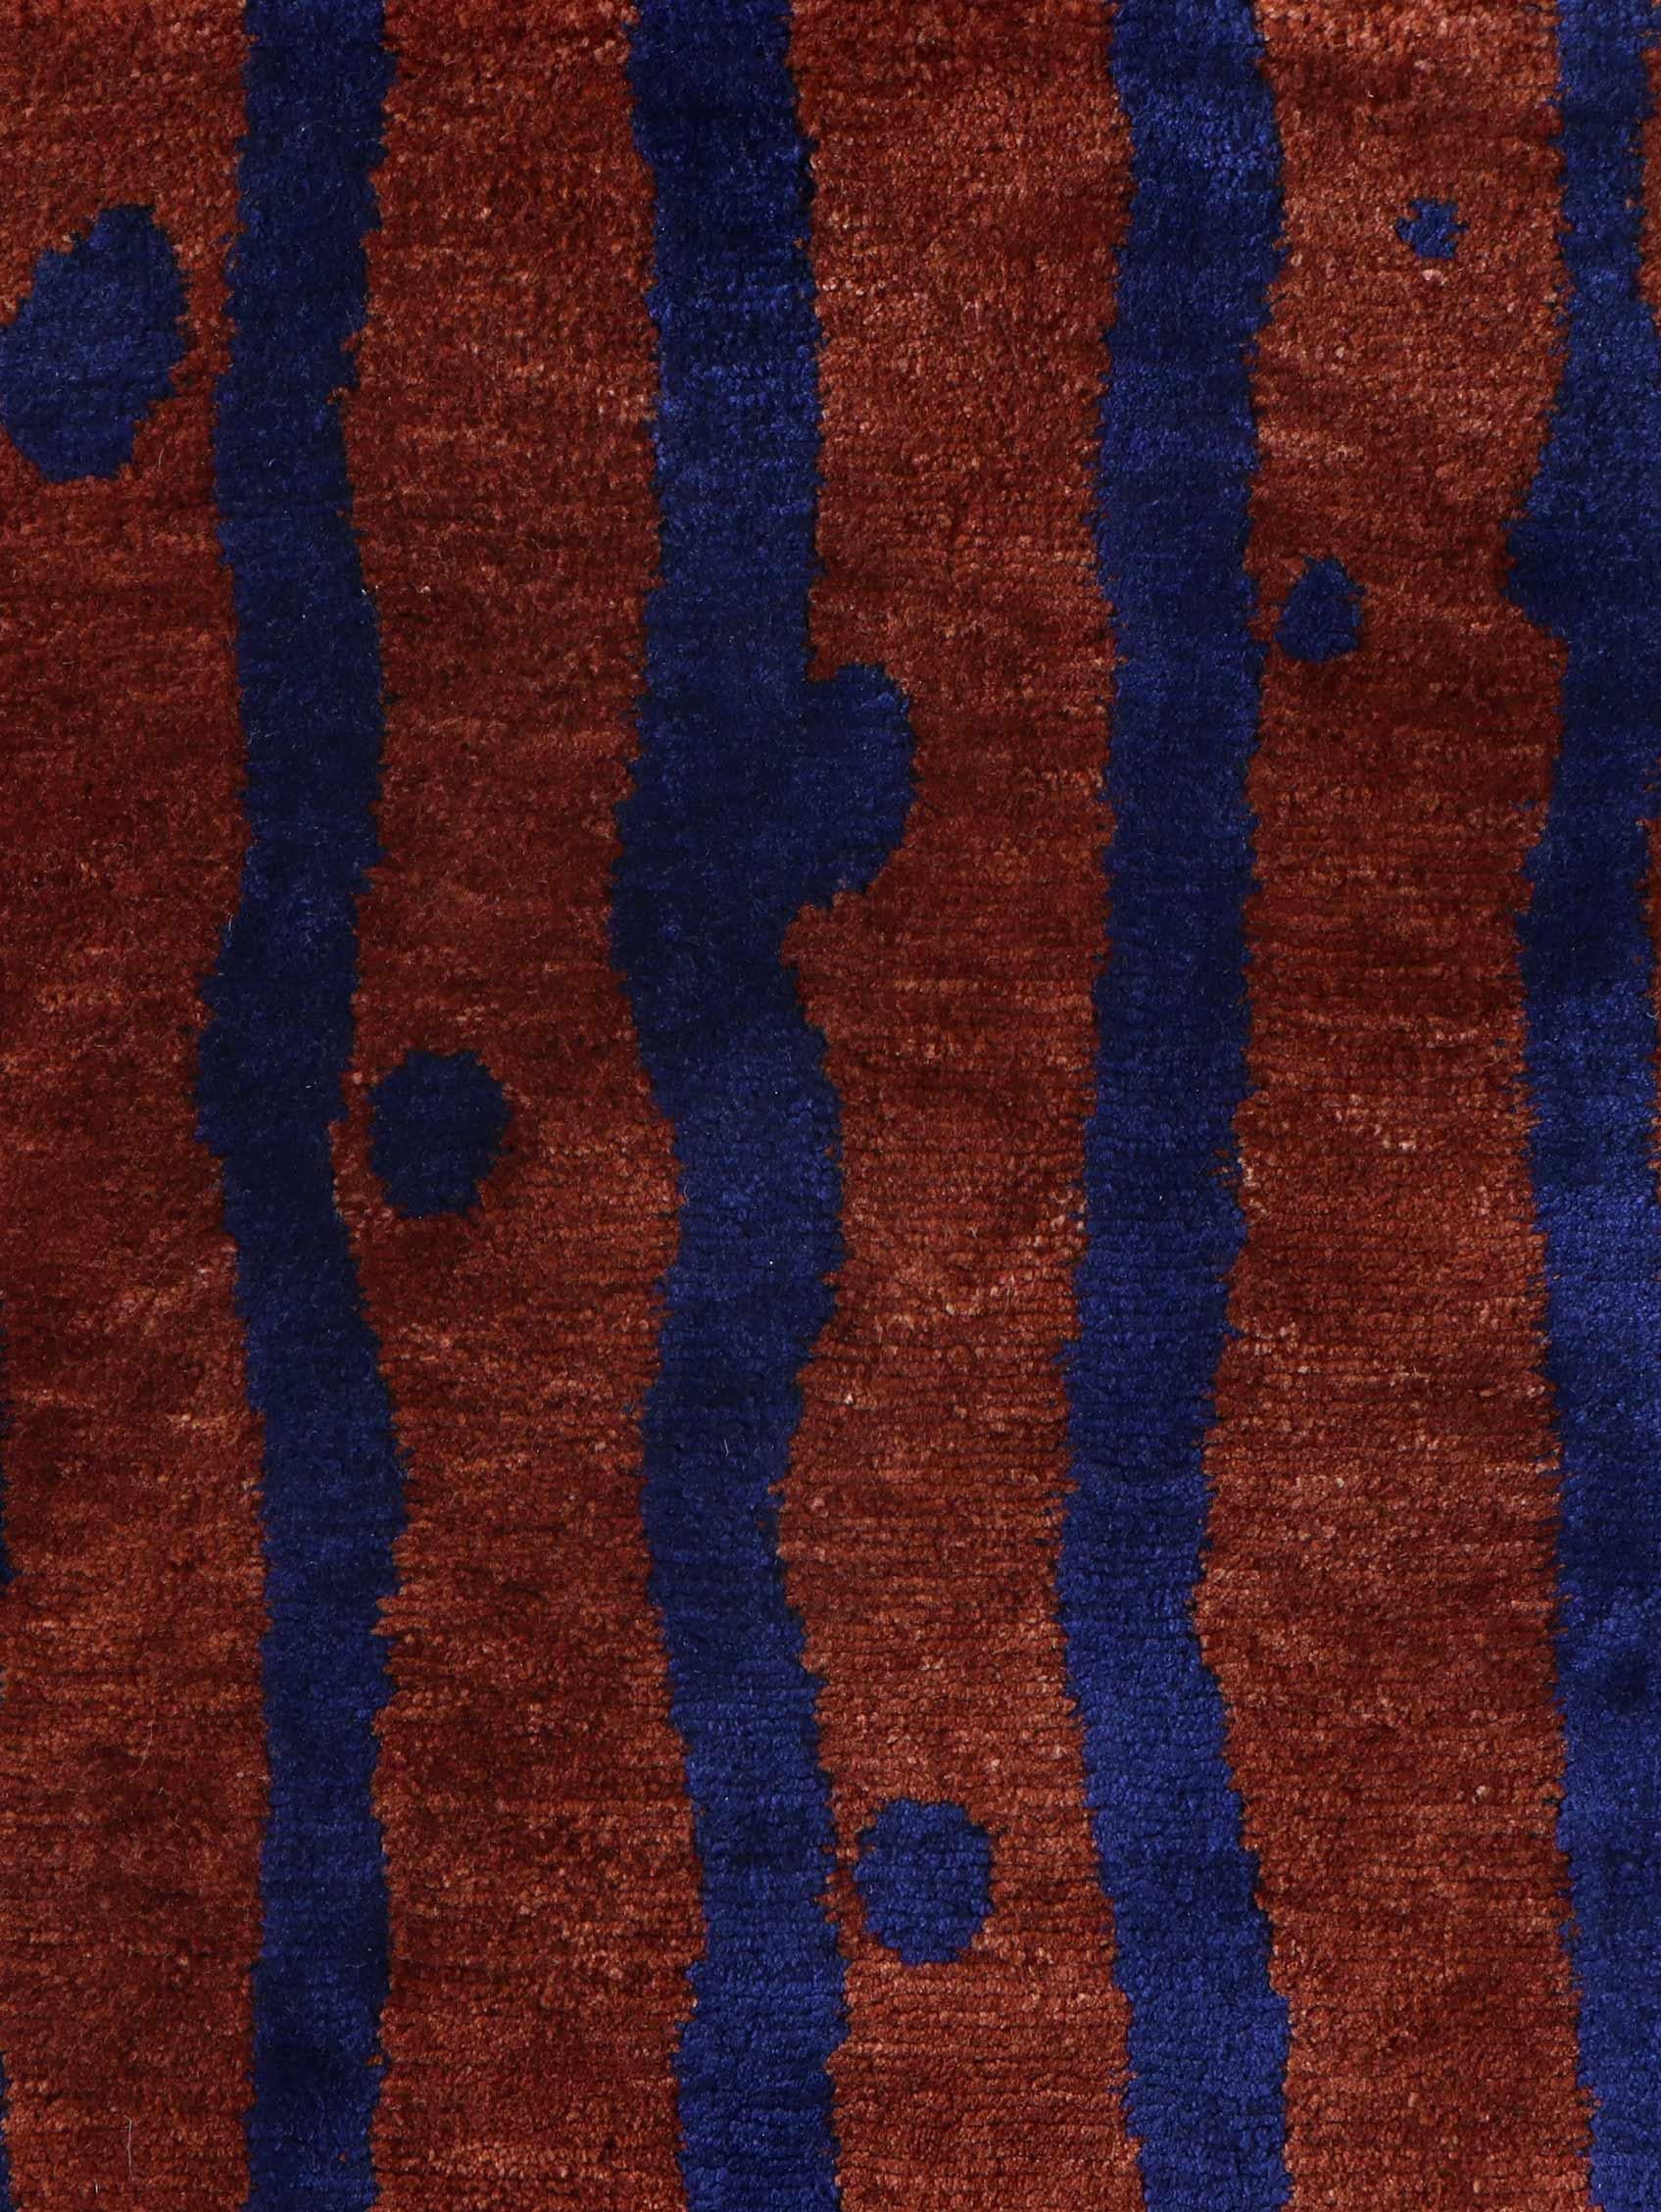 Rug pattern: Drippy Stripe - Isthmus
Material: 100% Merino Wool
Quality: Tibetan Cross Weave, handwoven 
Size: 8’-0